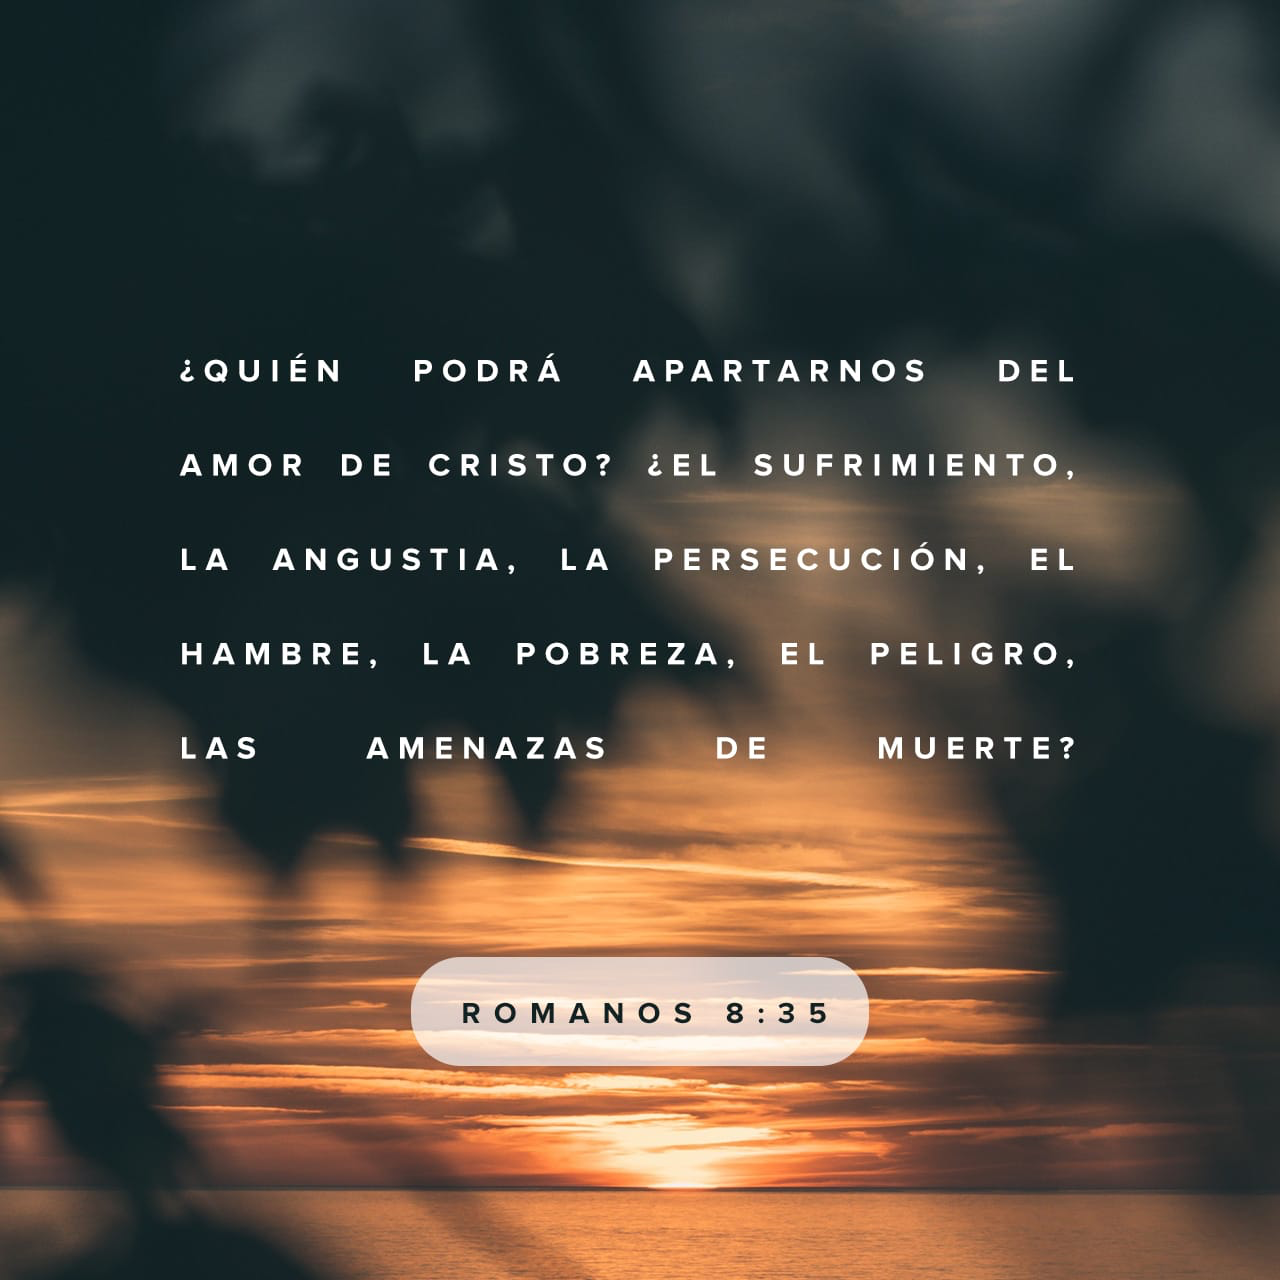 Romanos 8:35